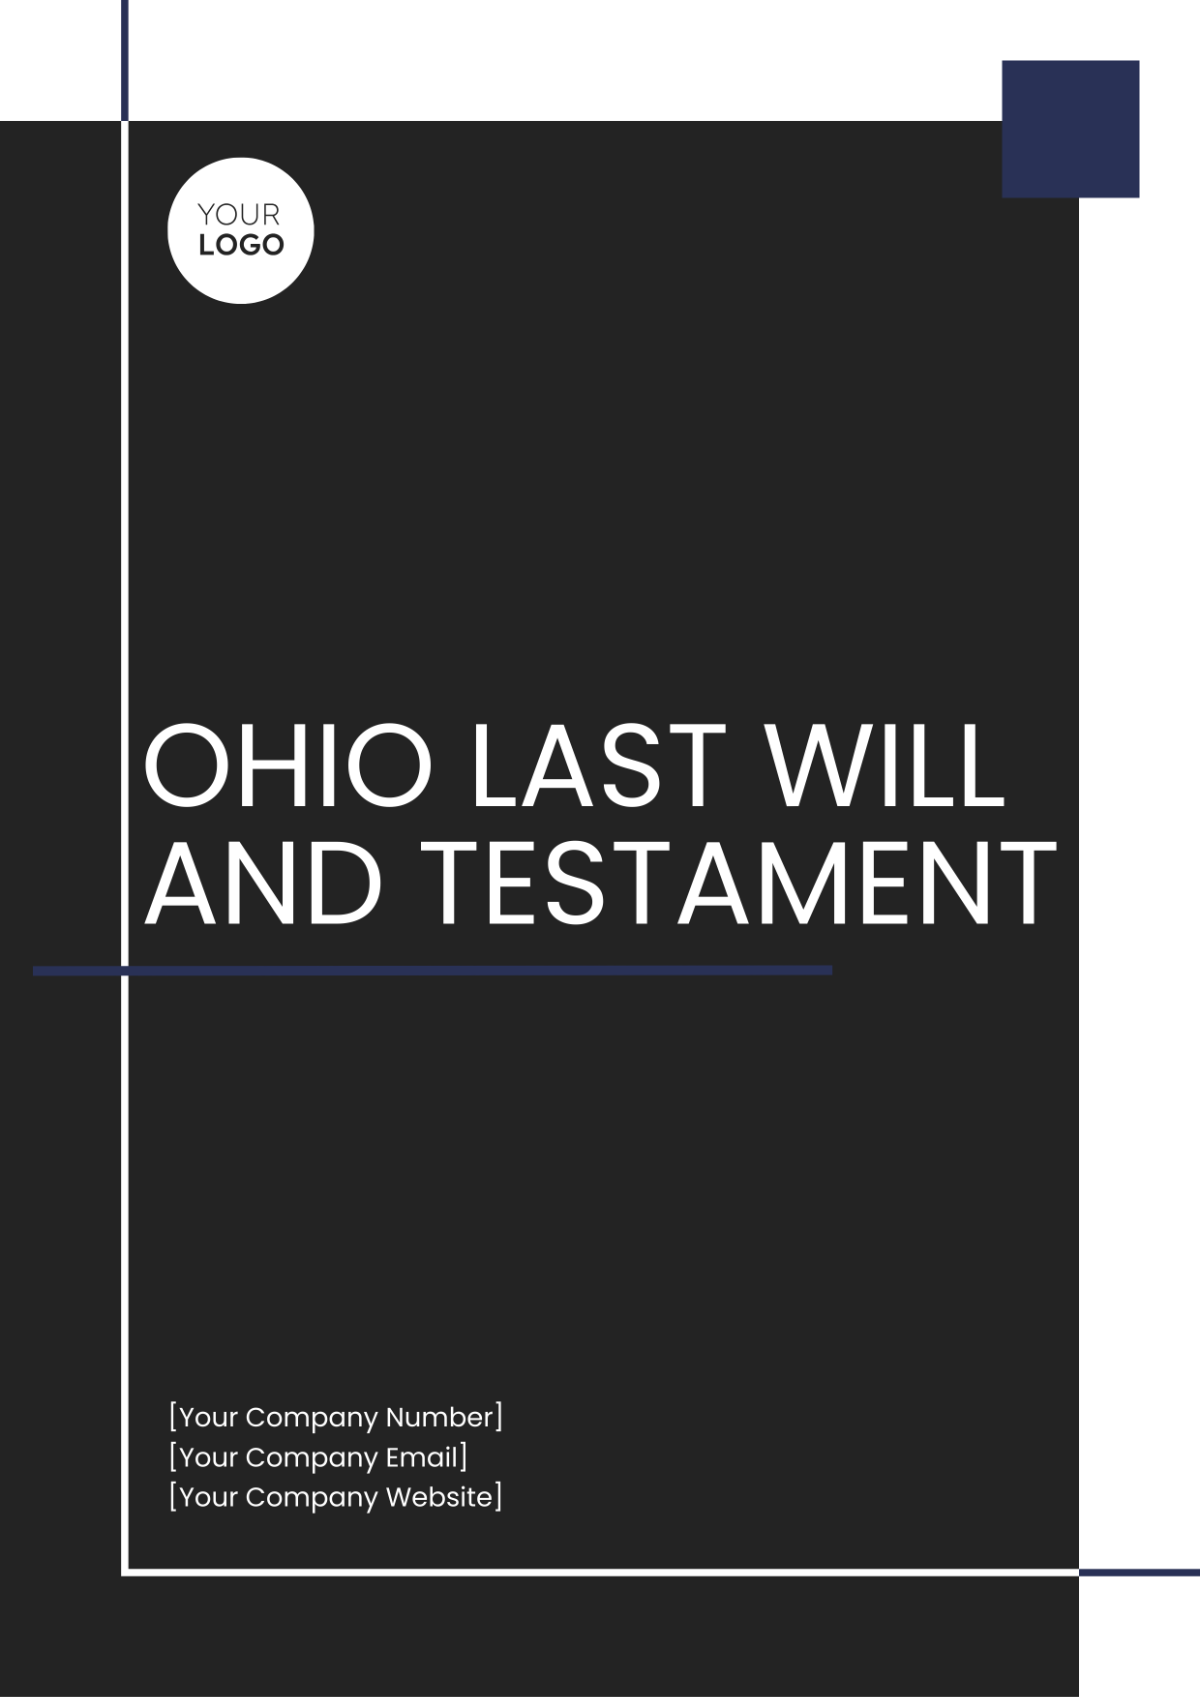 Free Ohio Last Will and Testament Template